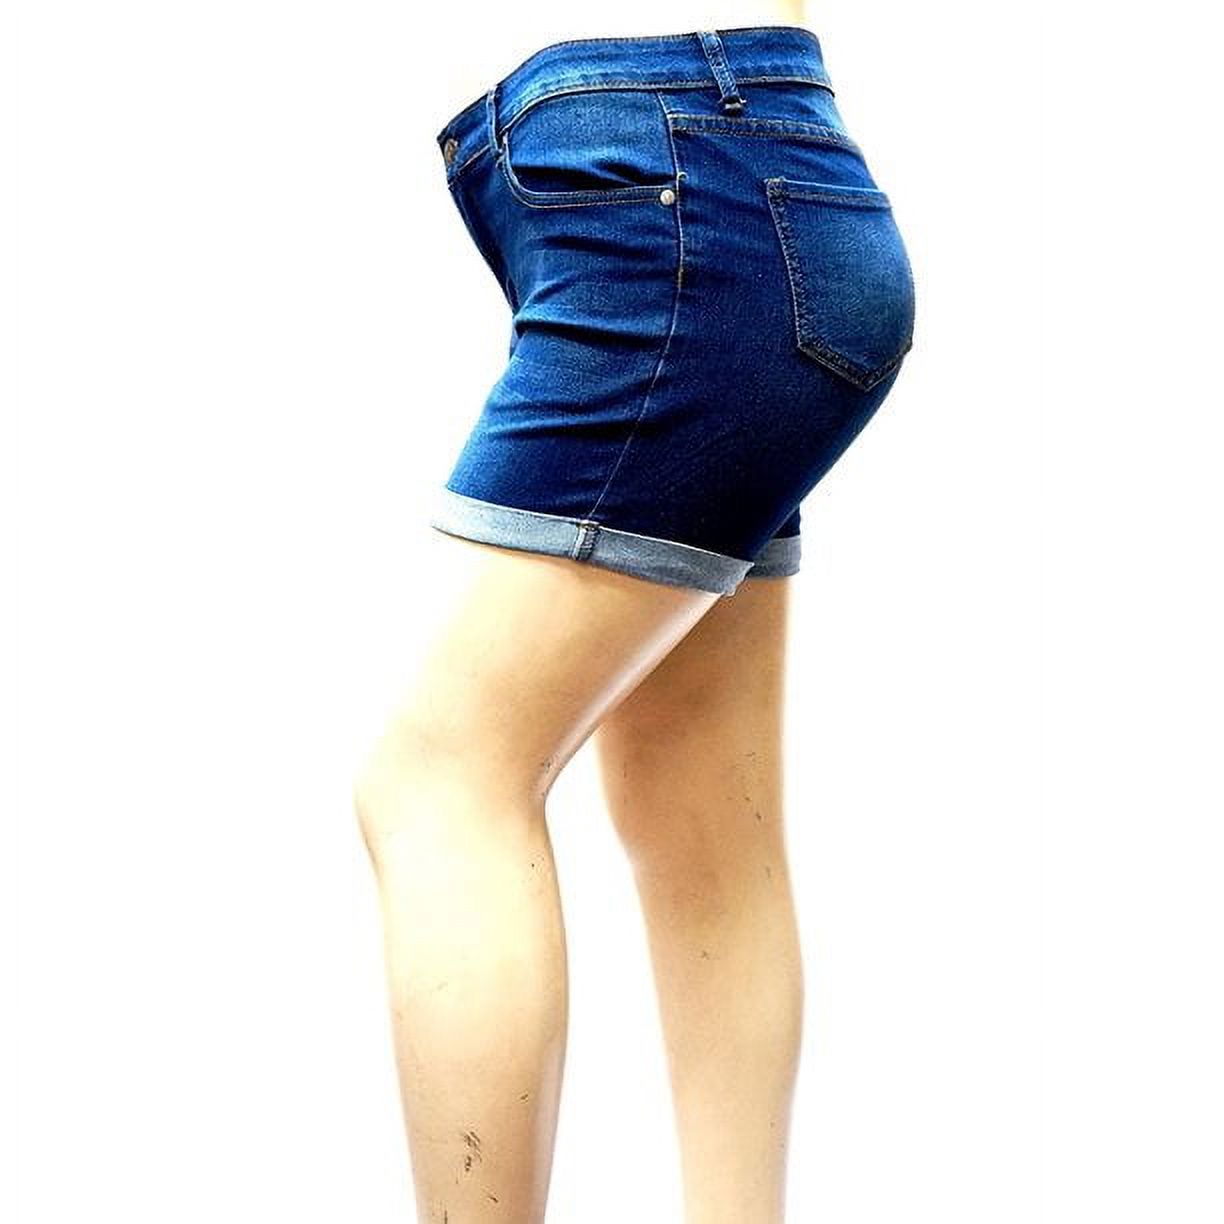 1826 Jeans Women's Plus Size Cuff Rolled Capri Bermuda Short Curvy Denim Jean - 2799 - image 3 of 3